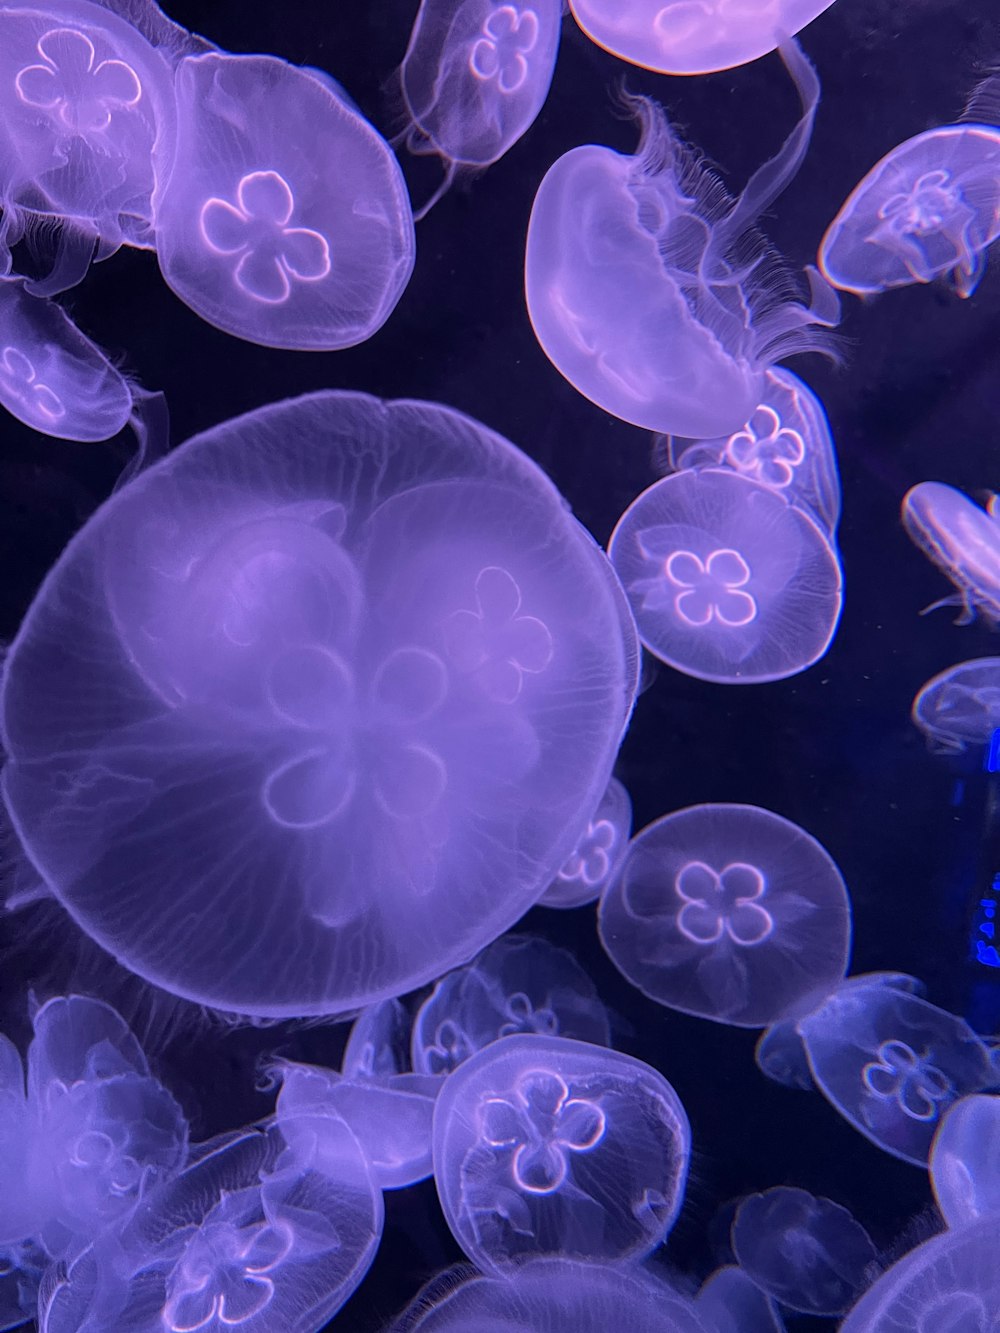 medusas verdes y blancas